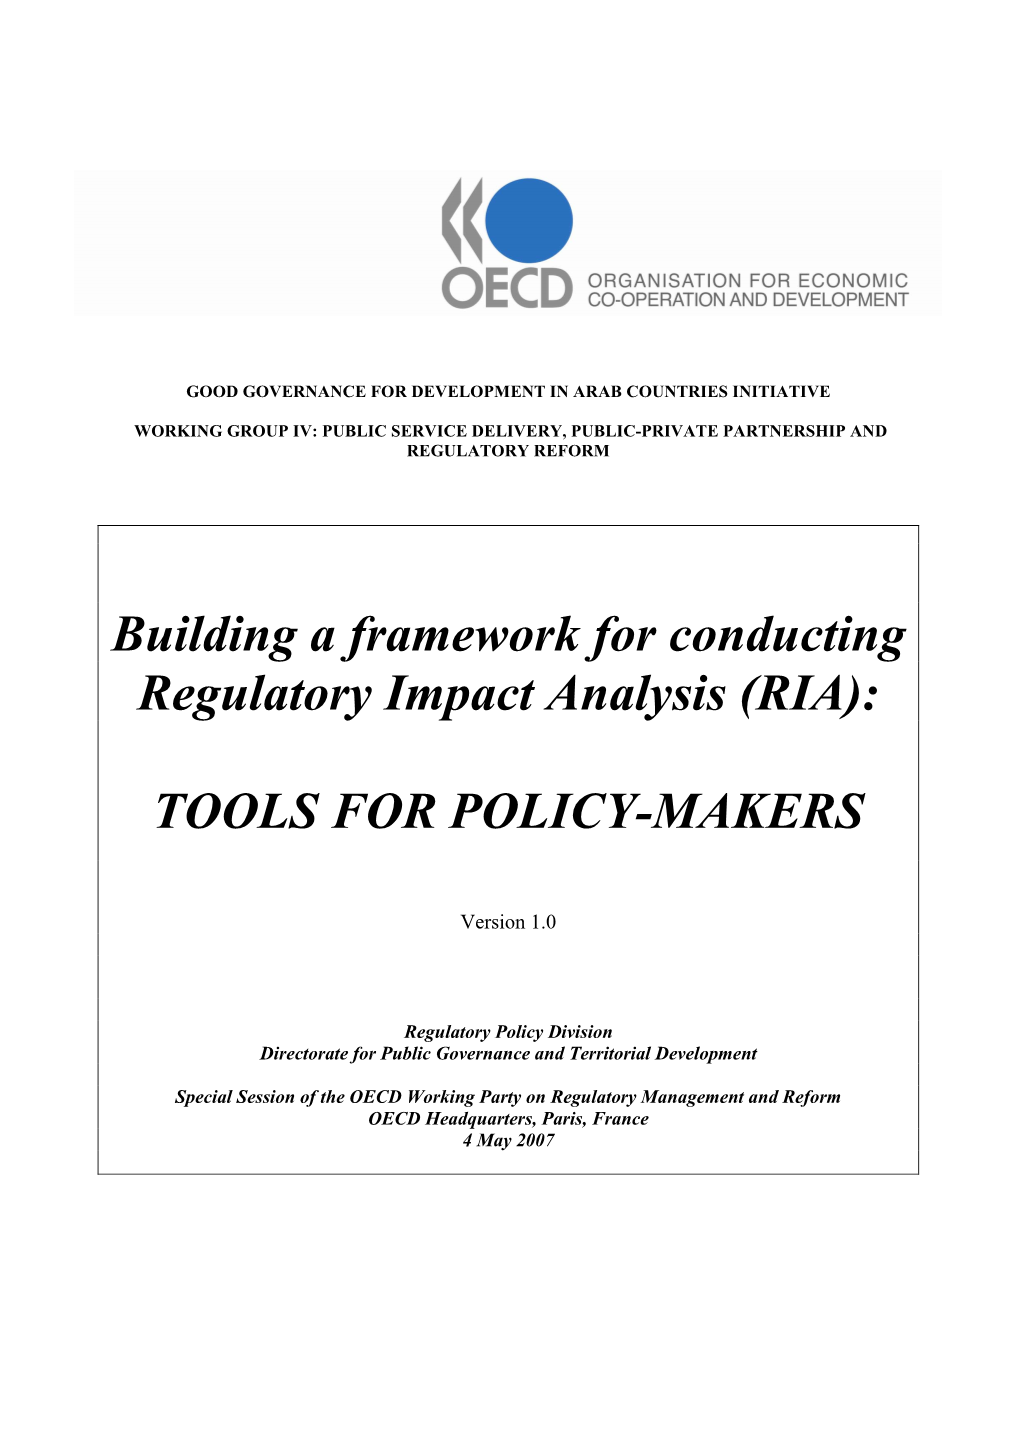 Building a Framework for Conducting Regulatory Impact Analysis (RIA)